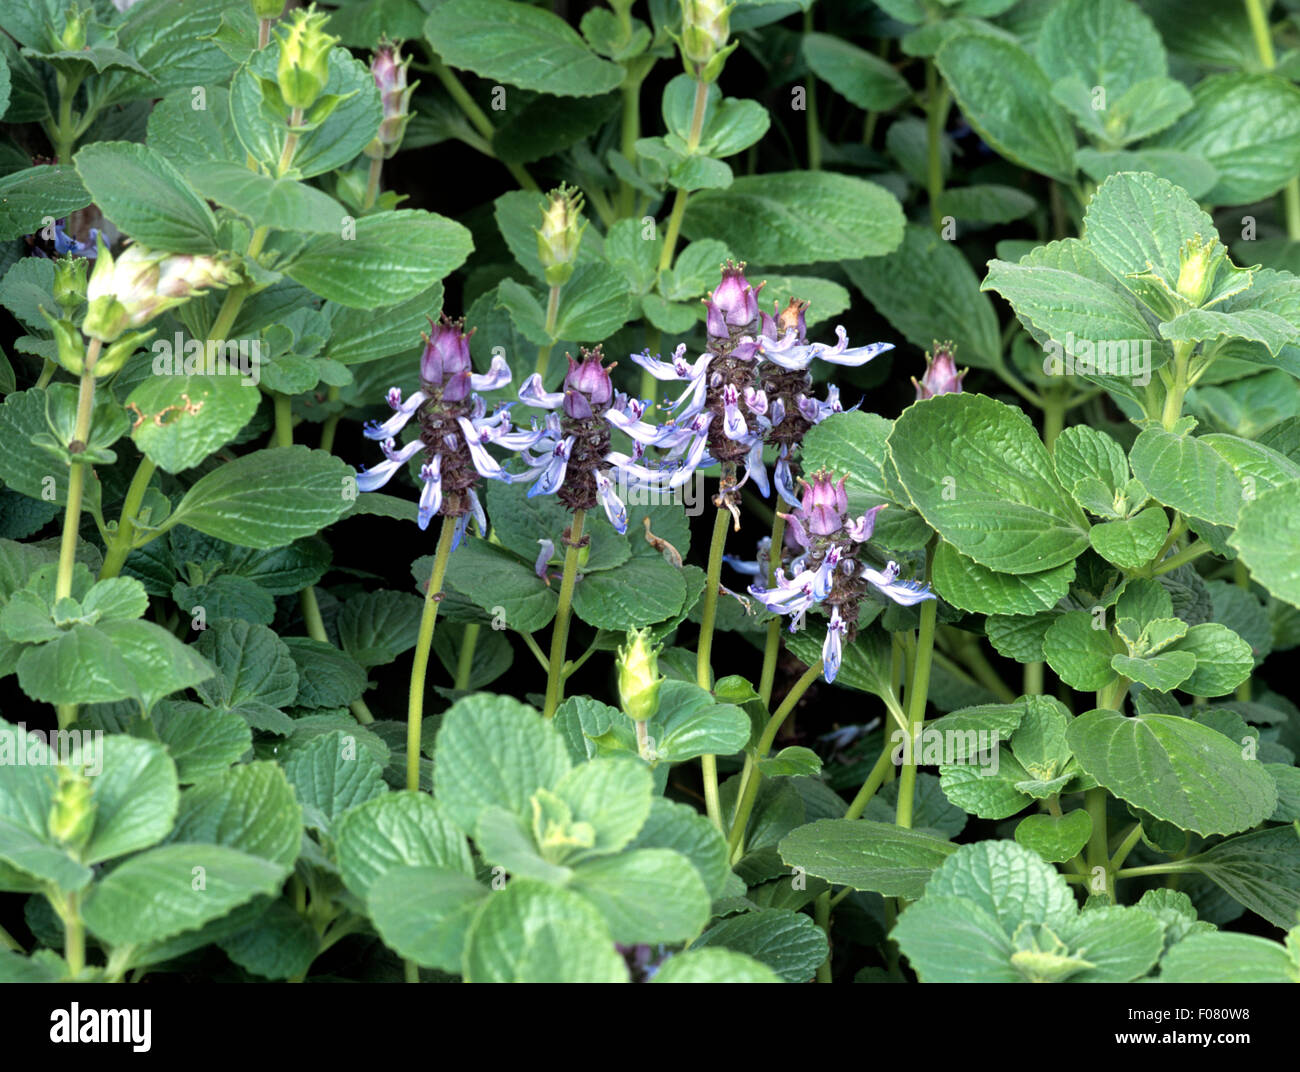 Verpiss-Dich Pflanze, Coleus, canin Stock Photo - Alamy